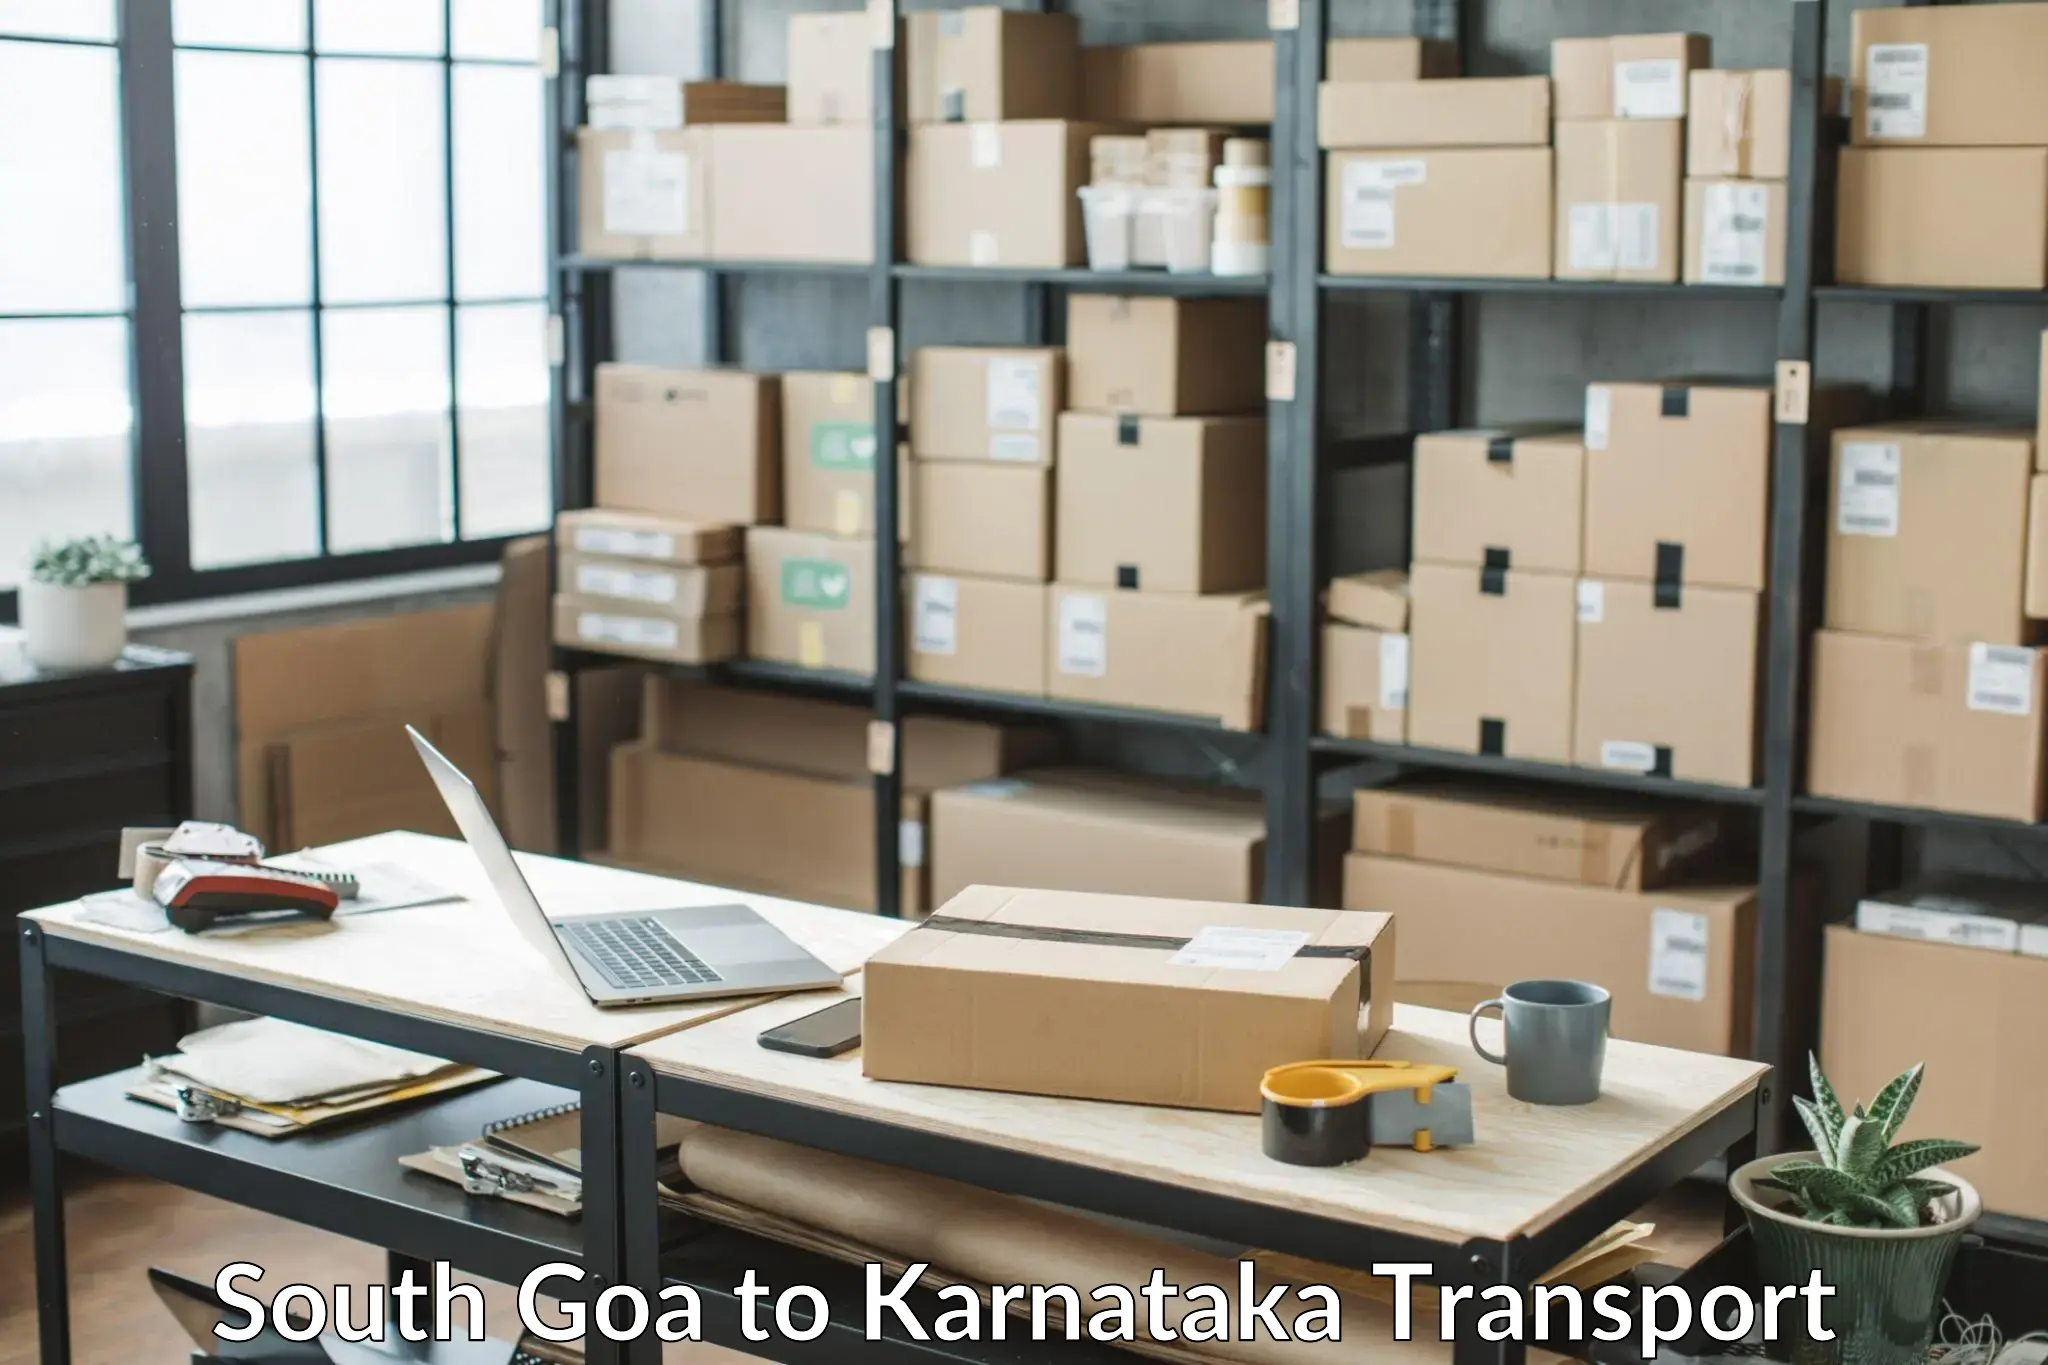 Transport in sharing in South Goa to Kolar